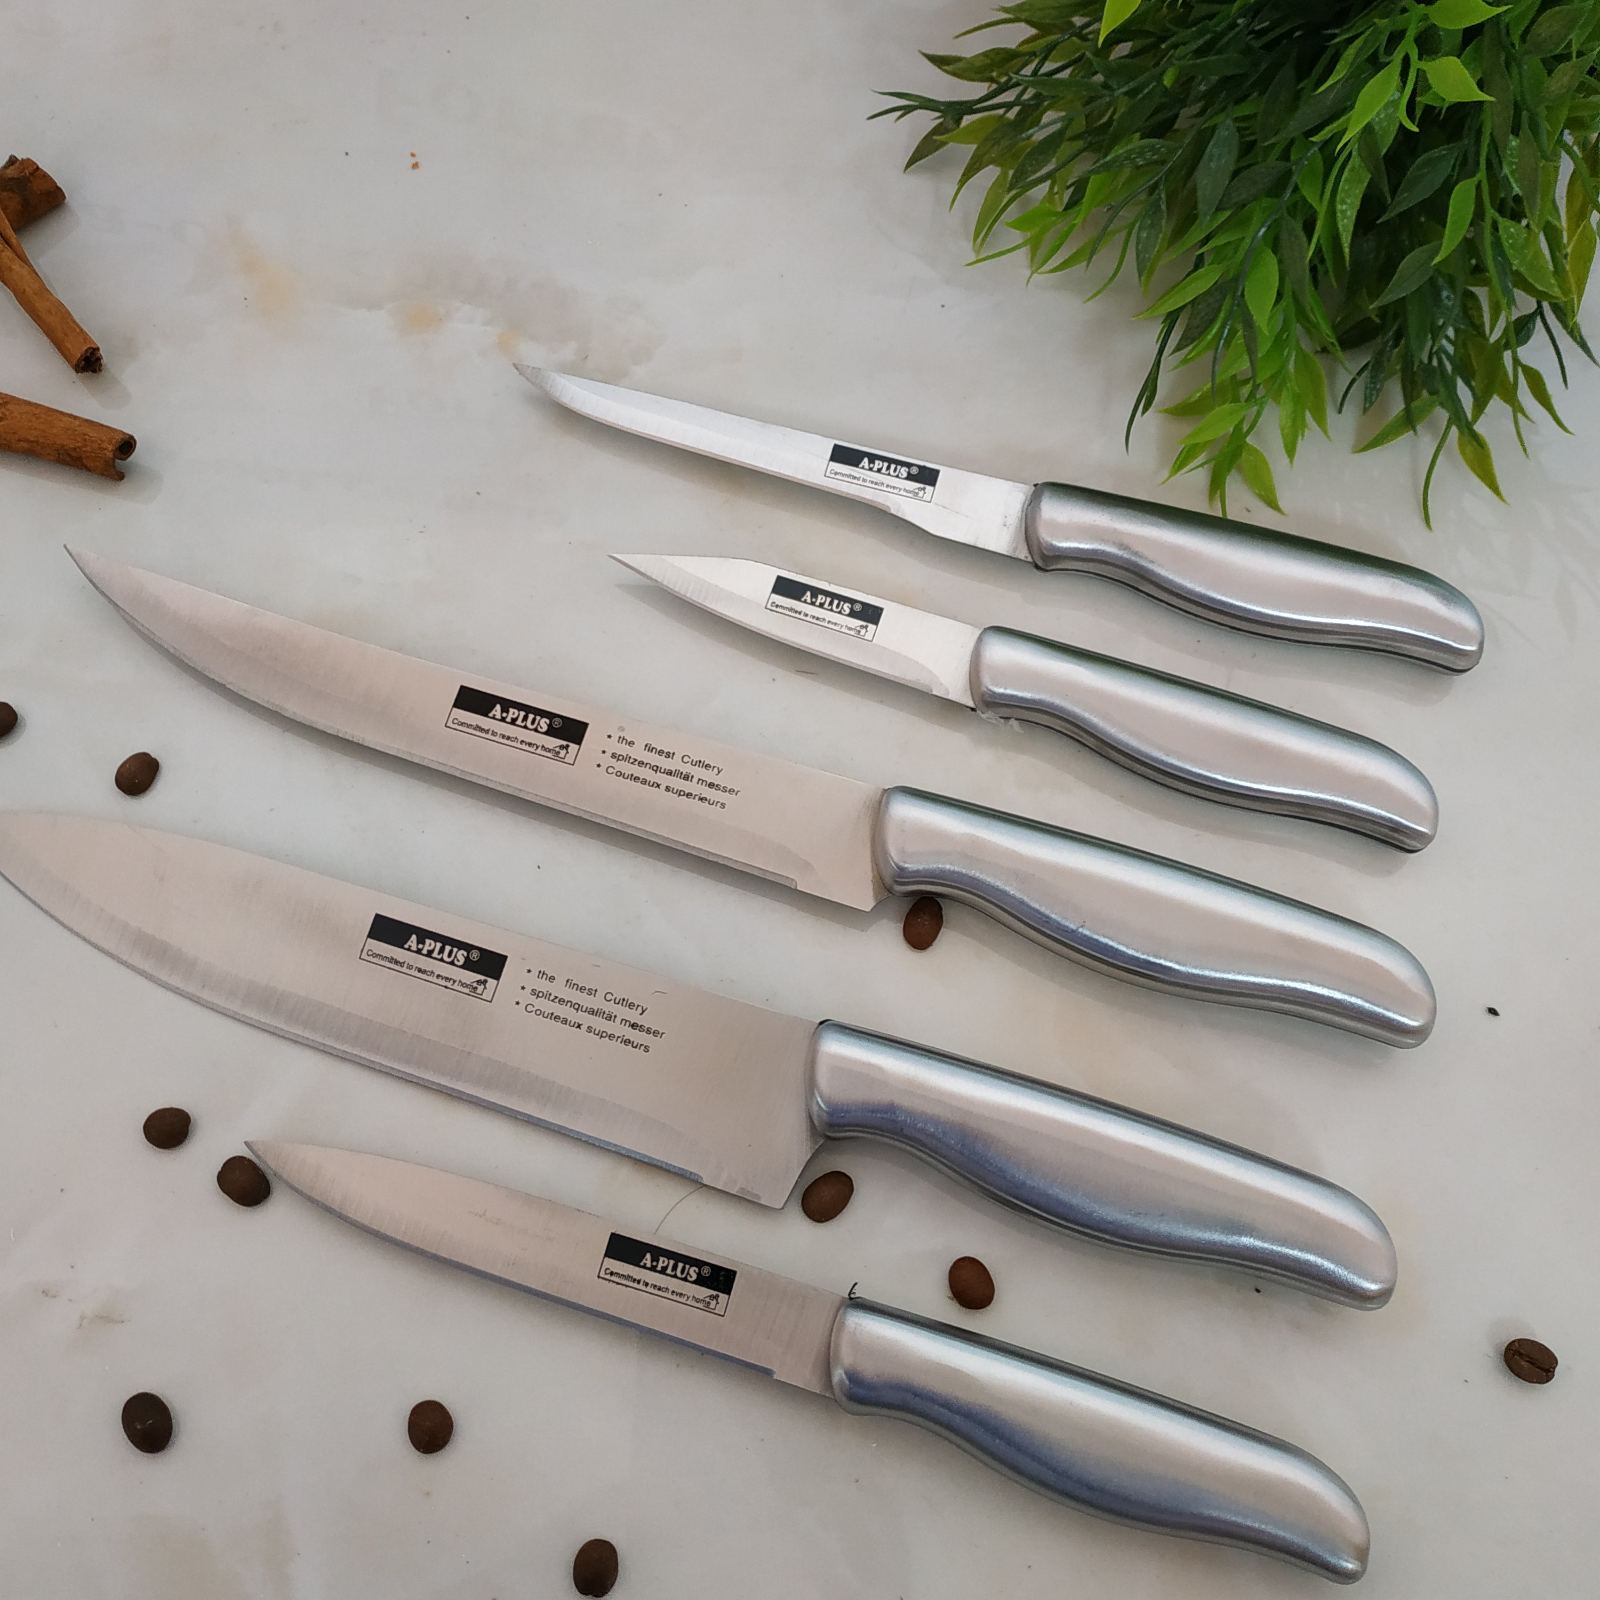 Набор ножей A-Plus - 1006 (7 предметов) ✅ базовая цена $9.54 ✔ Опт ✔ Скидки ✔ Заходите! - Интернет-магазин ✅ Фортуна-опт ✅